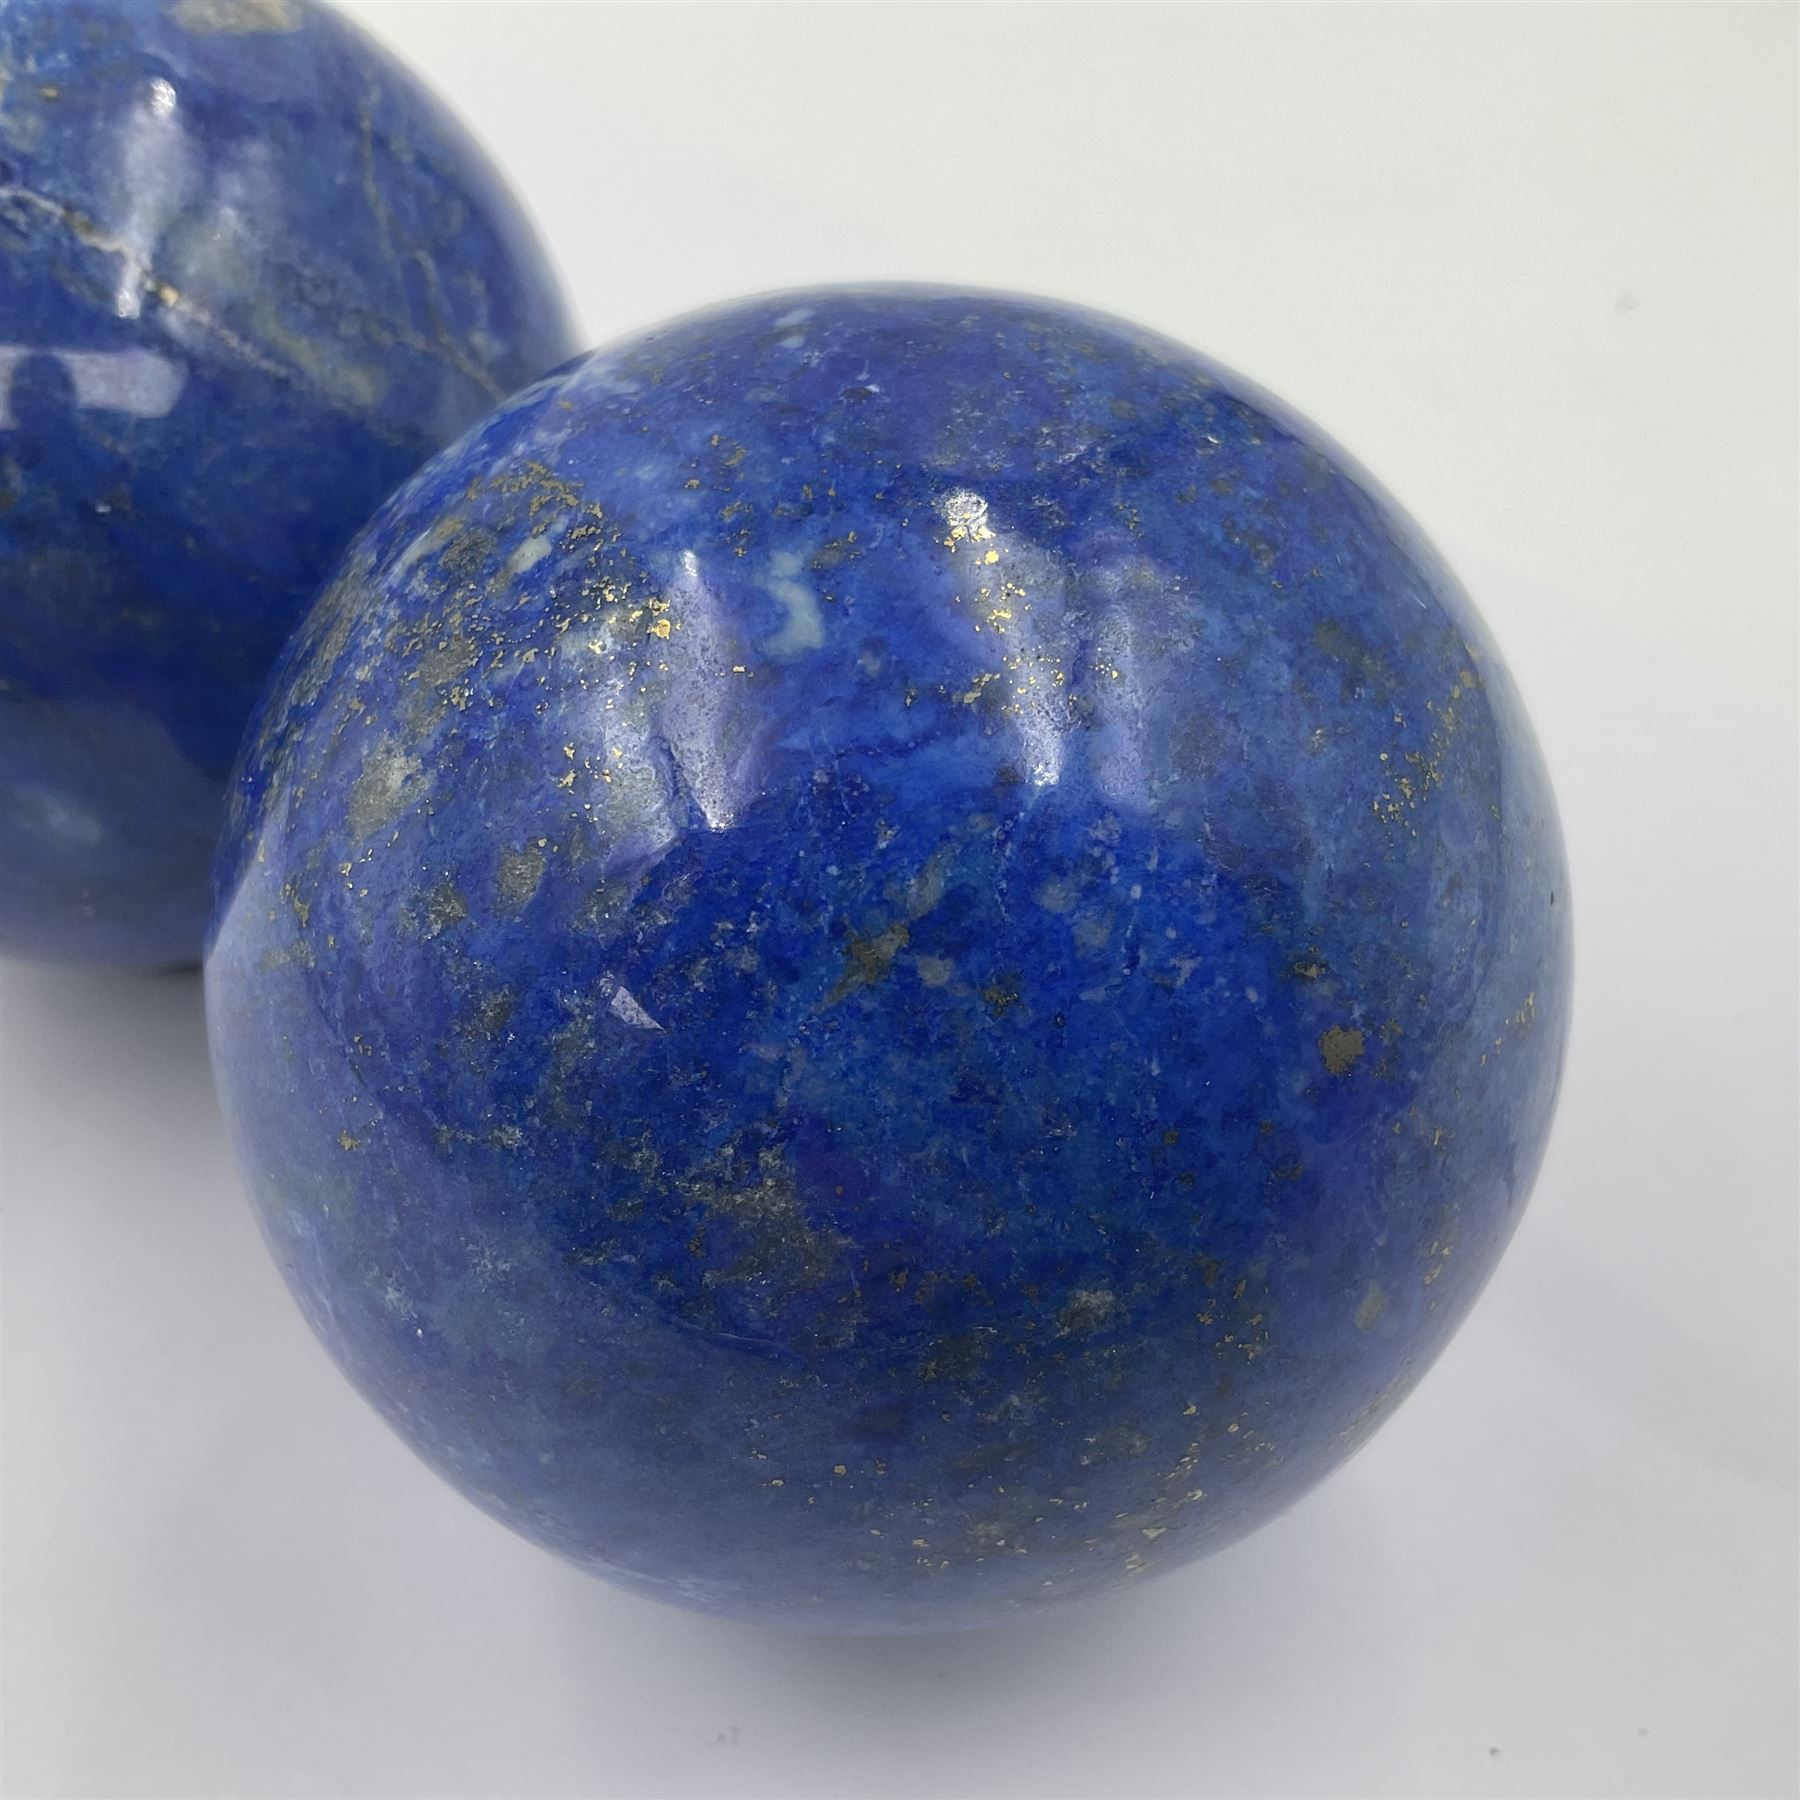 Pair of Lapis lazuli spheres - Image 6 of 8